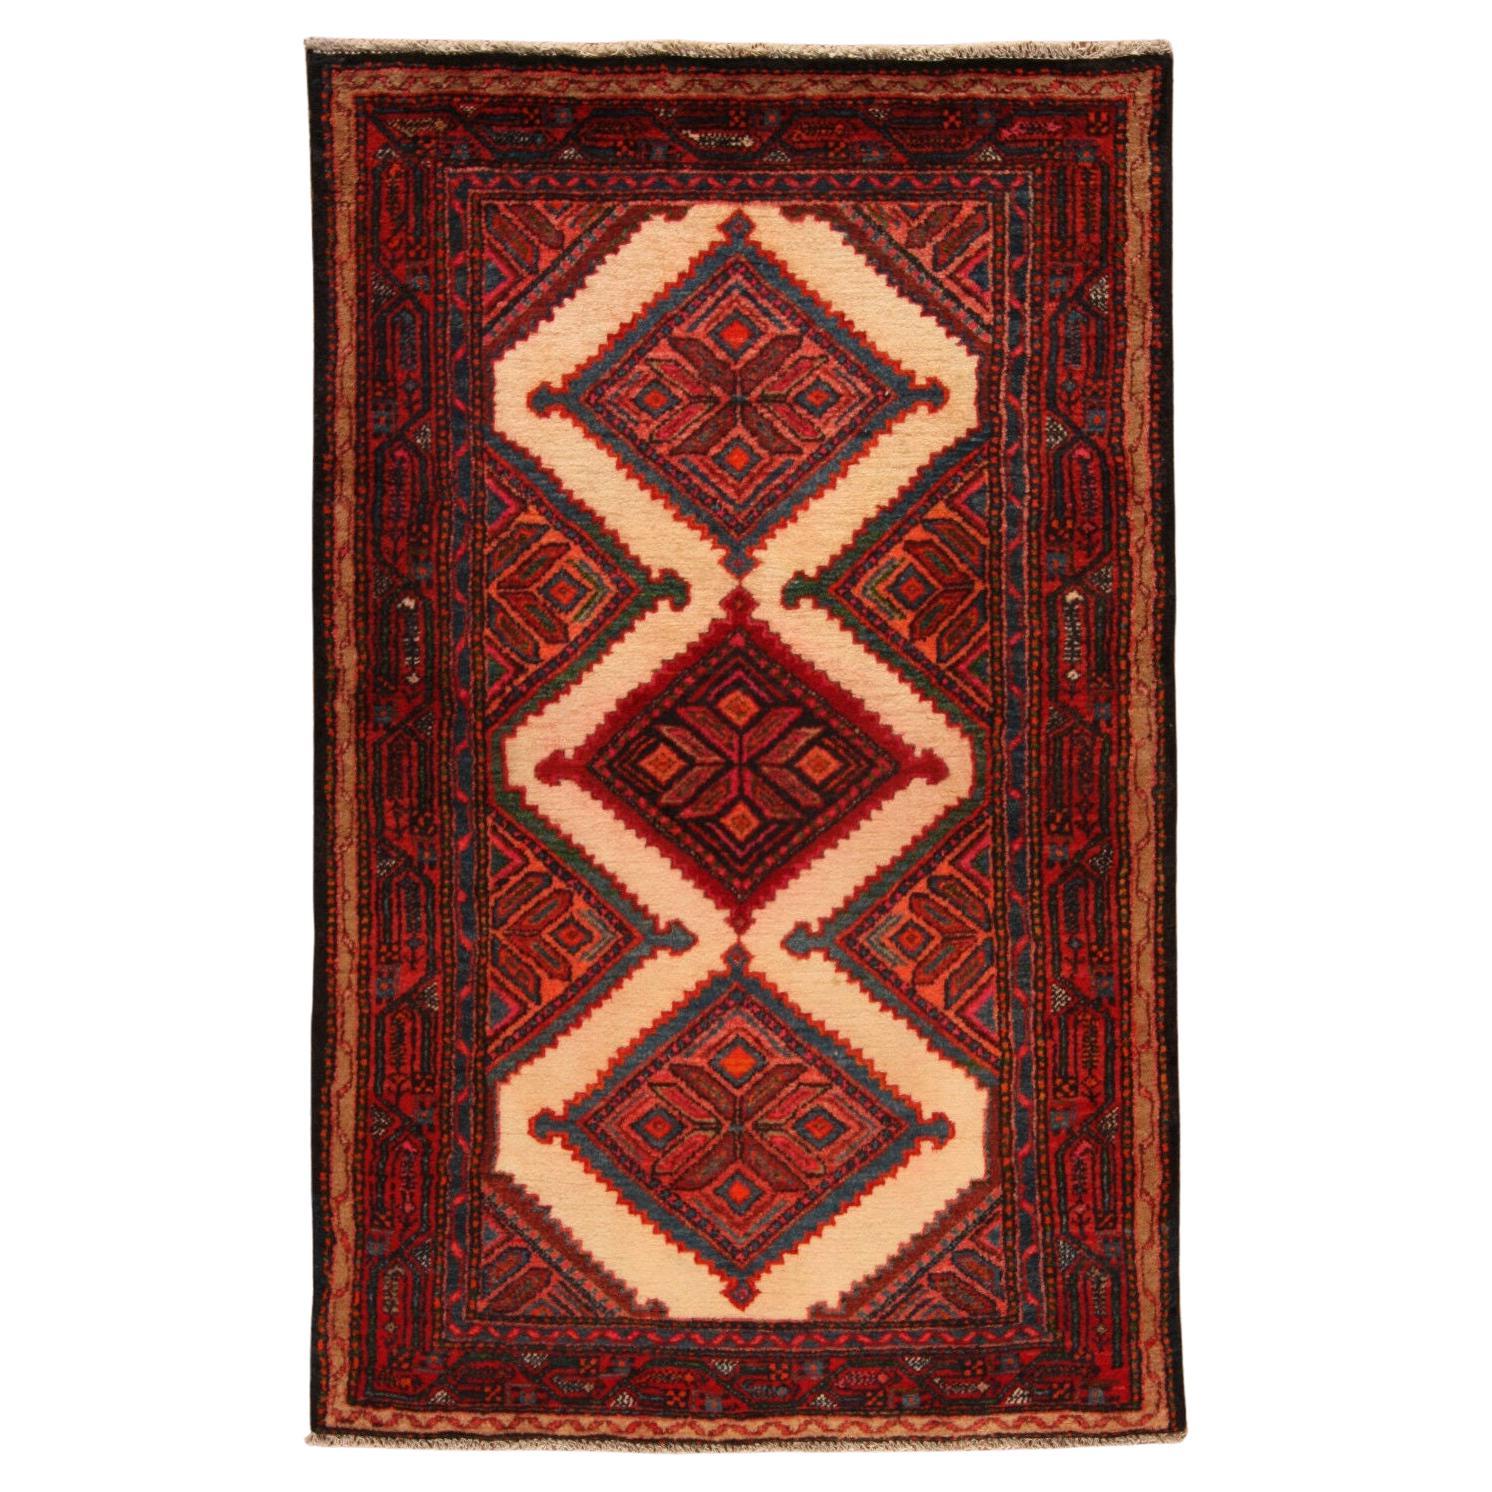 Handmade Vintage Persian Style Hamadan Rug 3.5' x 5.5', 1970s - 1T28